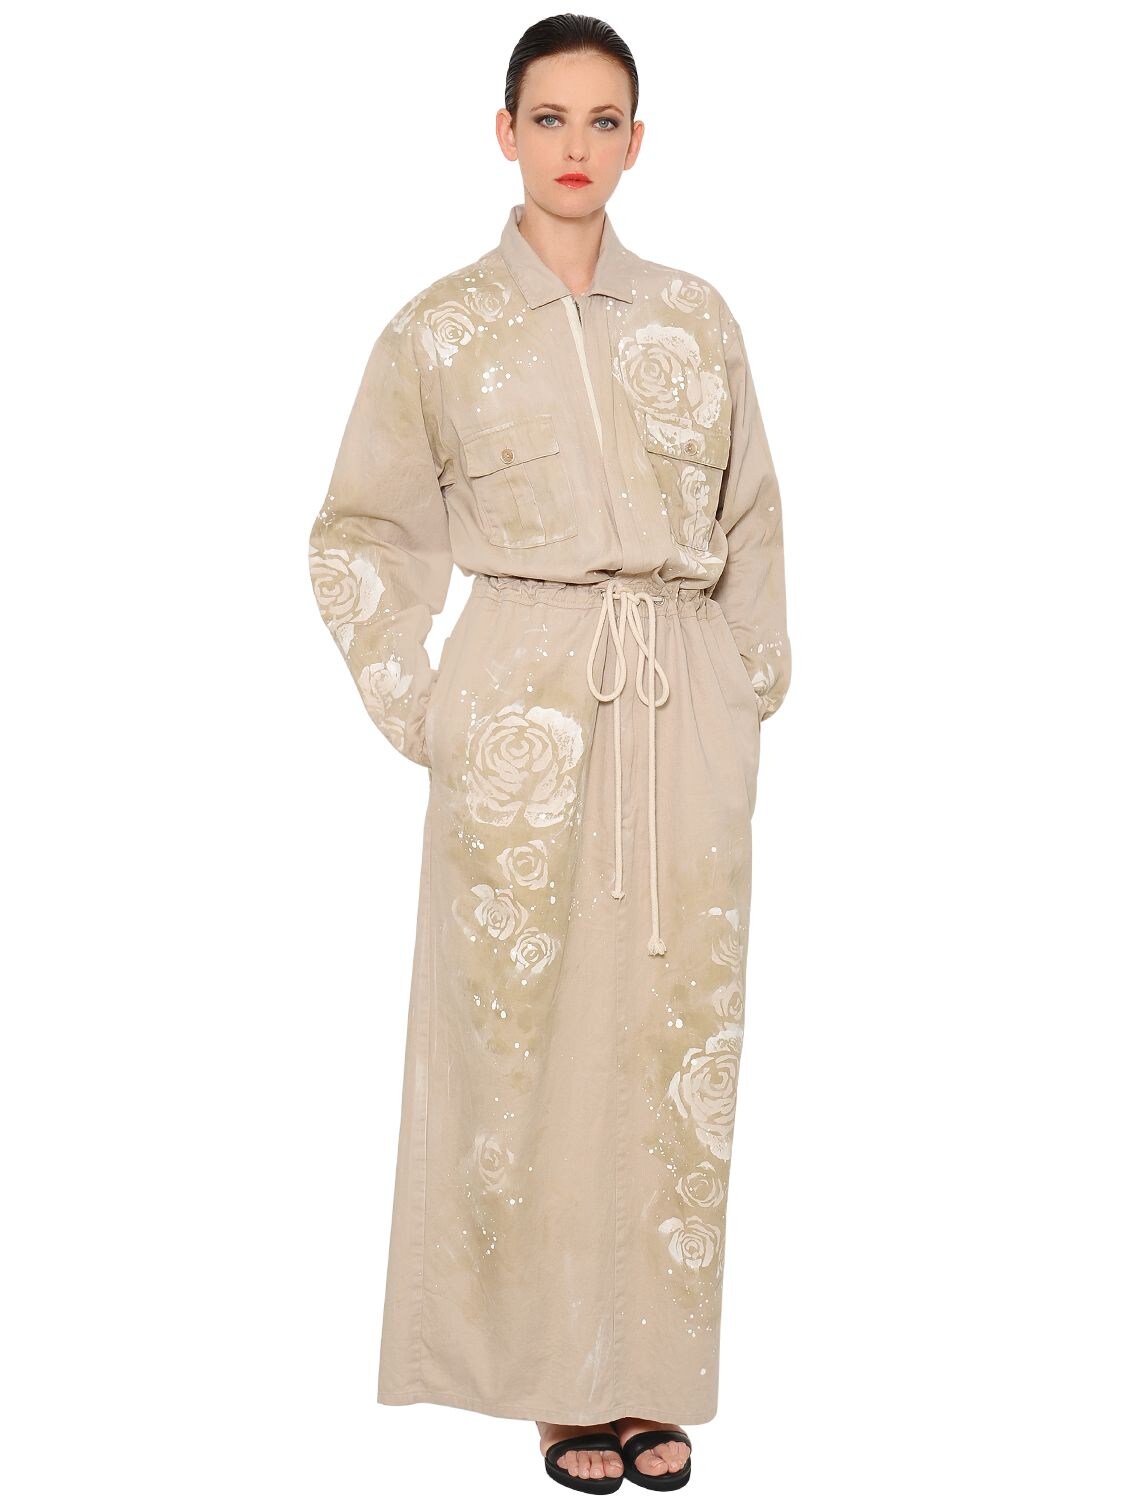 MARNA ROSpray Painted Light Cotton Twill Dress | DailyMail